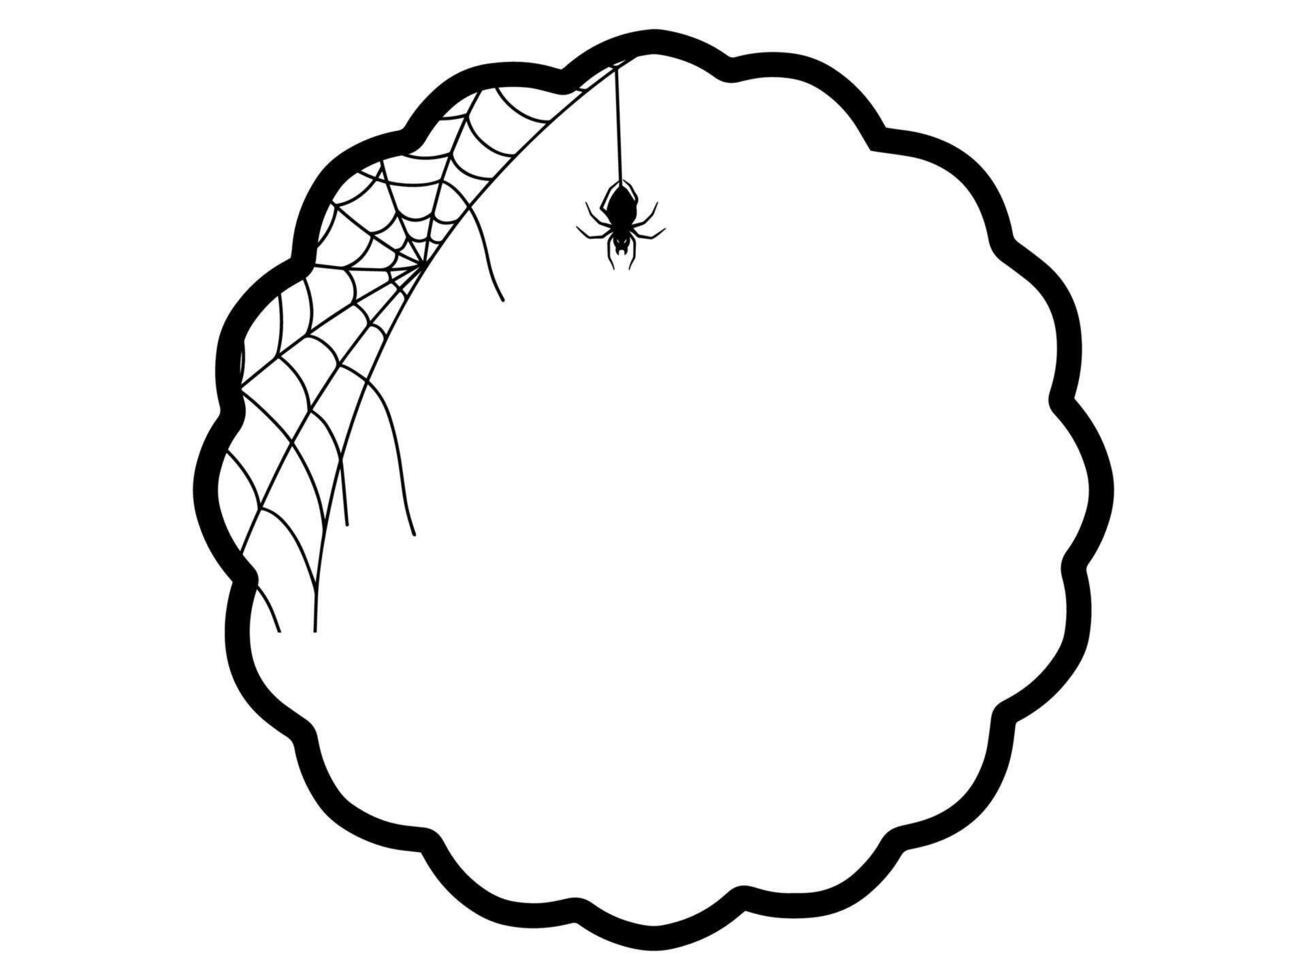 Halloween Cadre Contexte avec araignée toiles vecteur